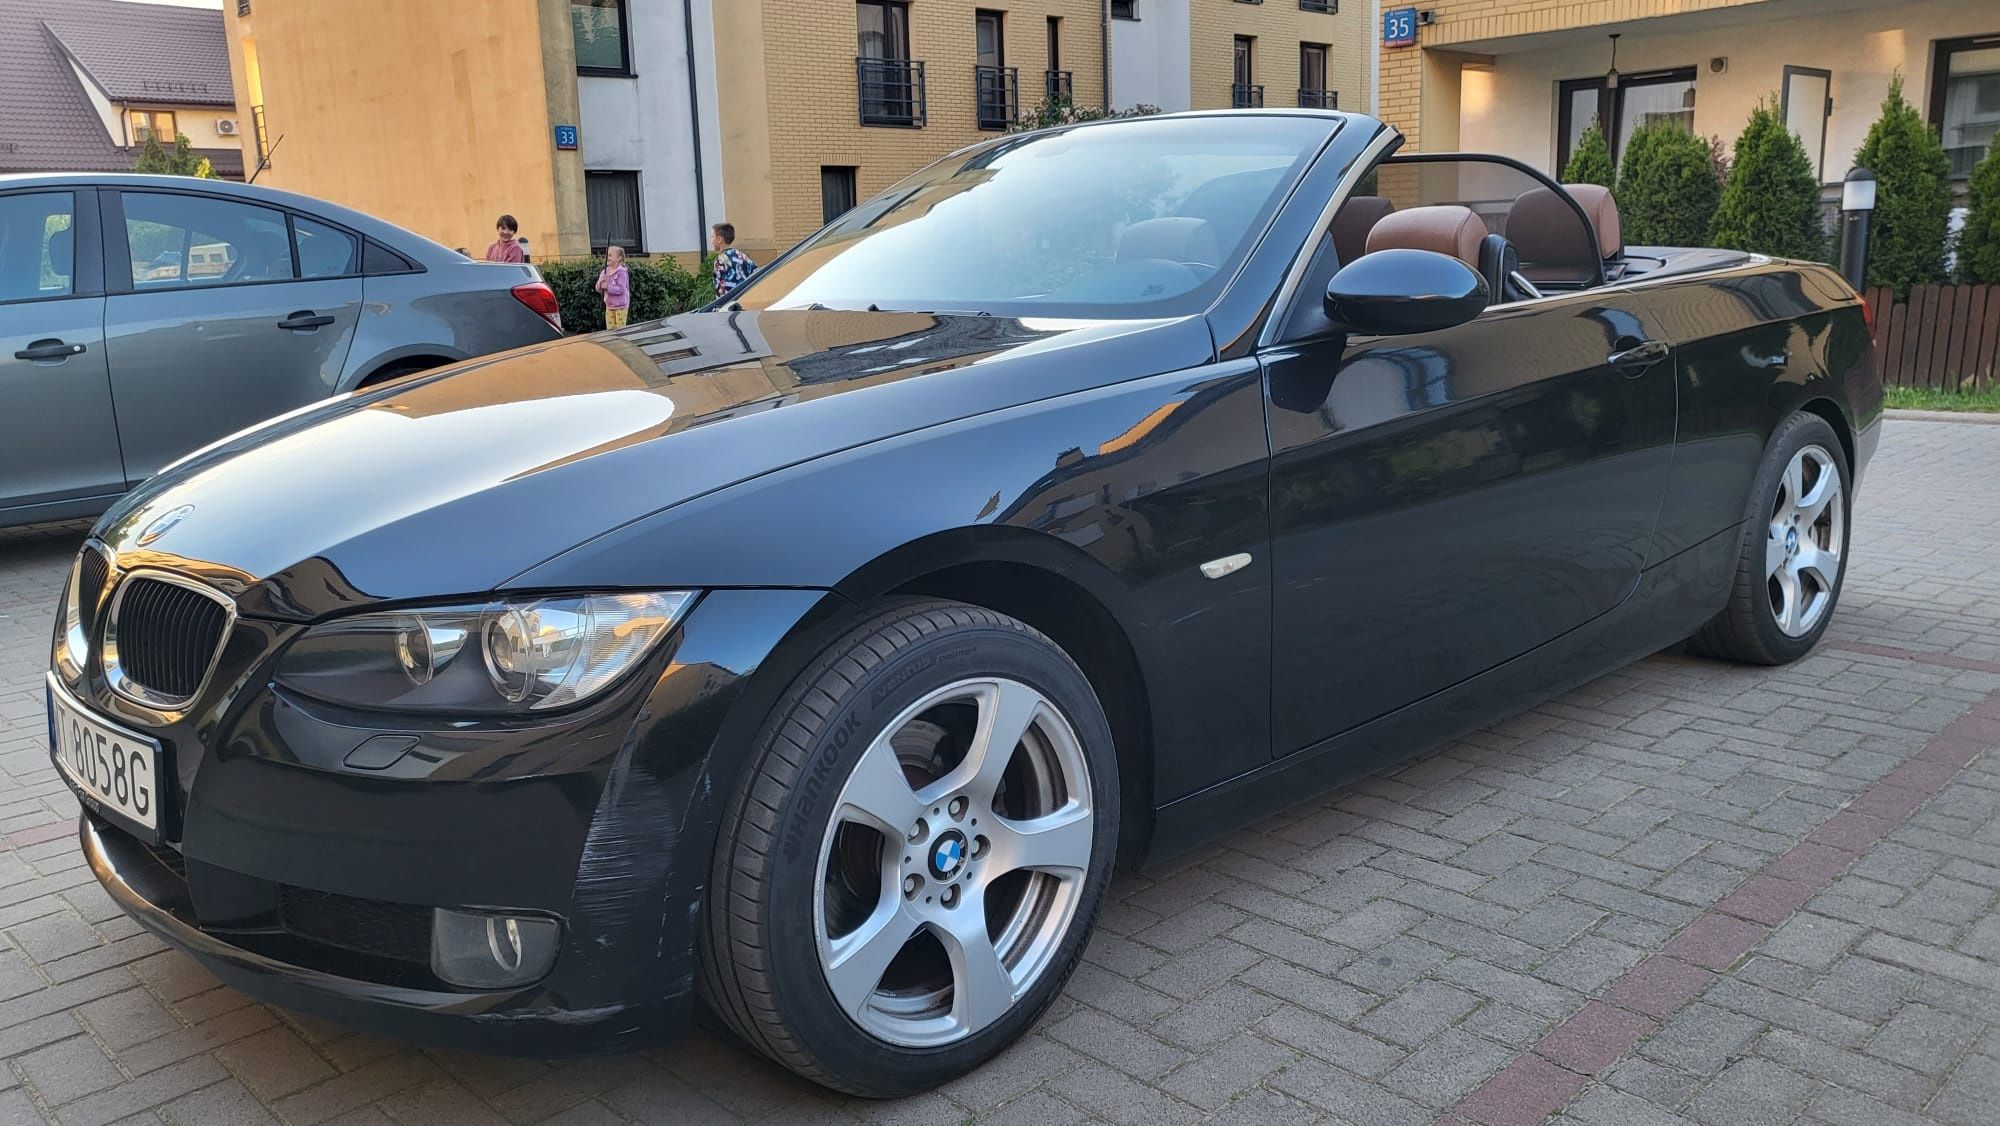 BMW E93 CABRIO 2,0 BENZYNA 170 KM .Piękne auto na lato